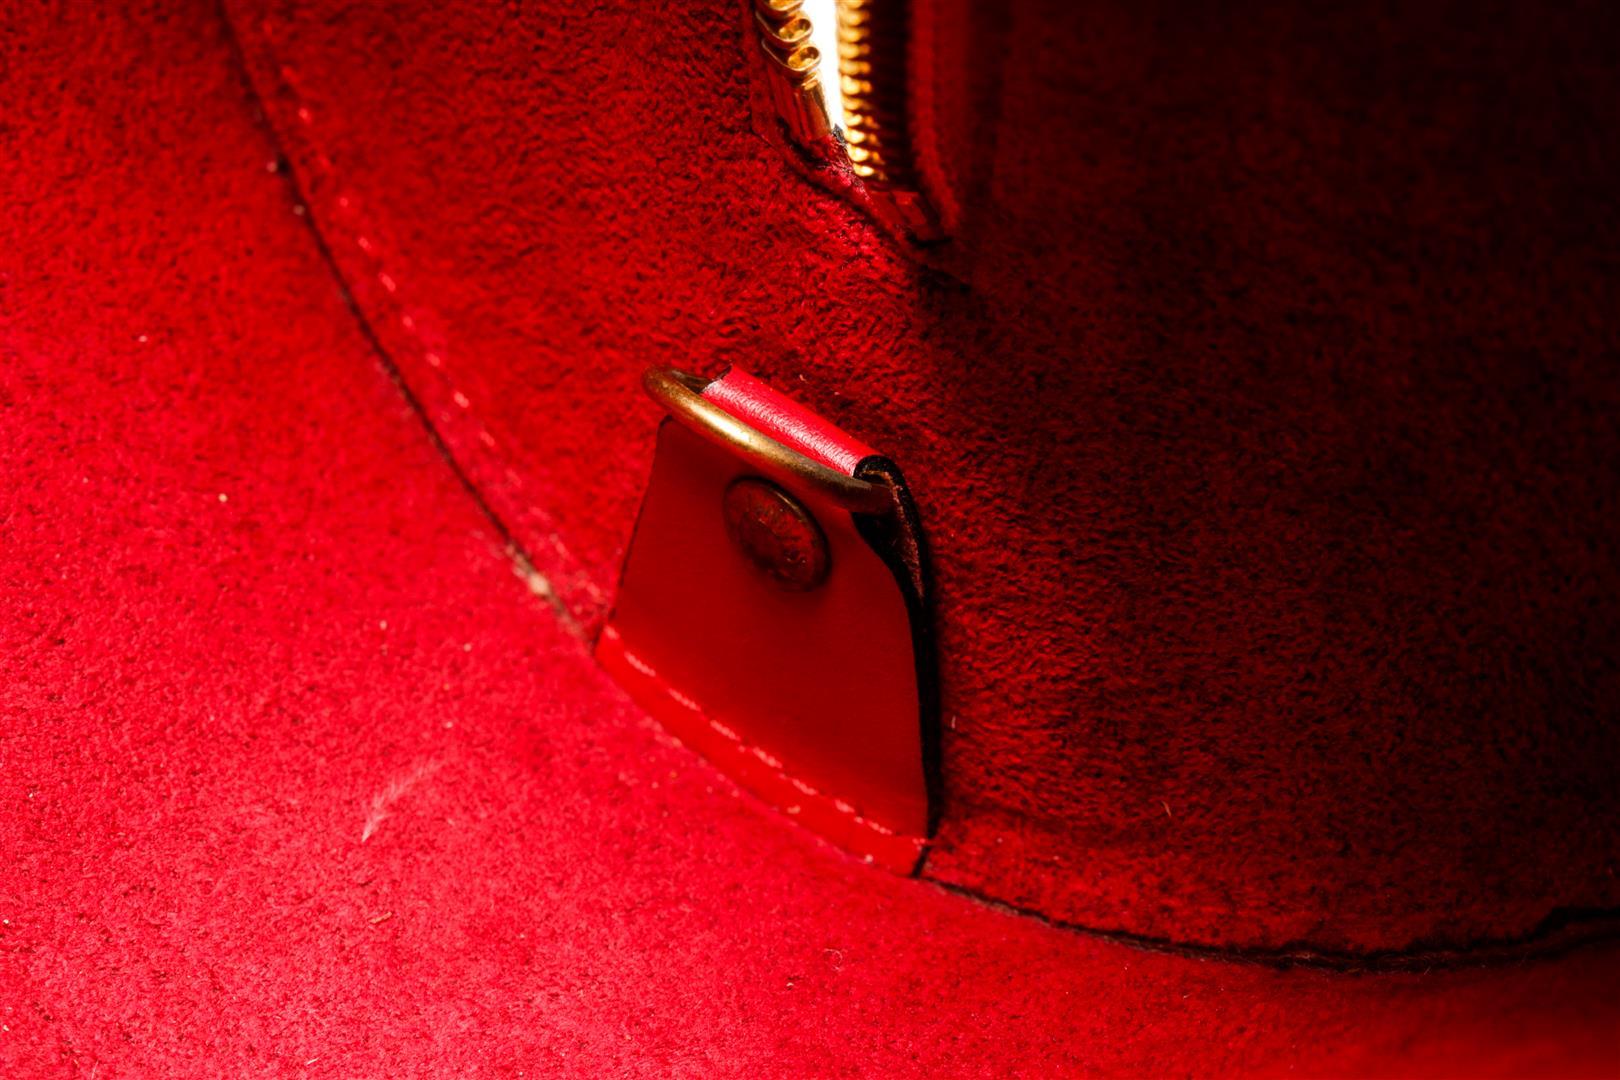 Louis Vuitton Red Epi Leather Soufflot Tote Bag